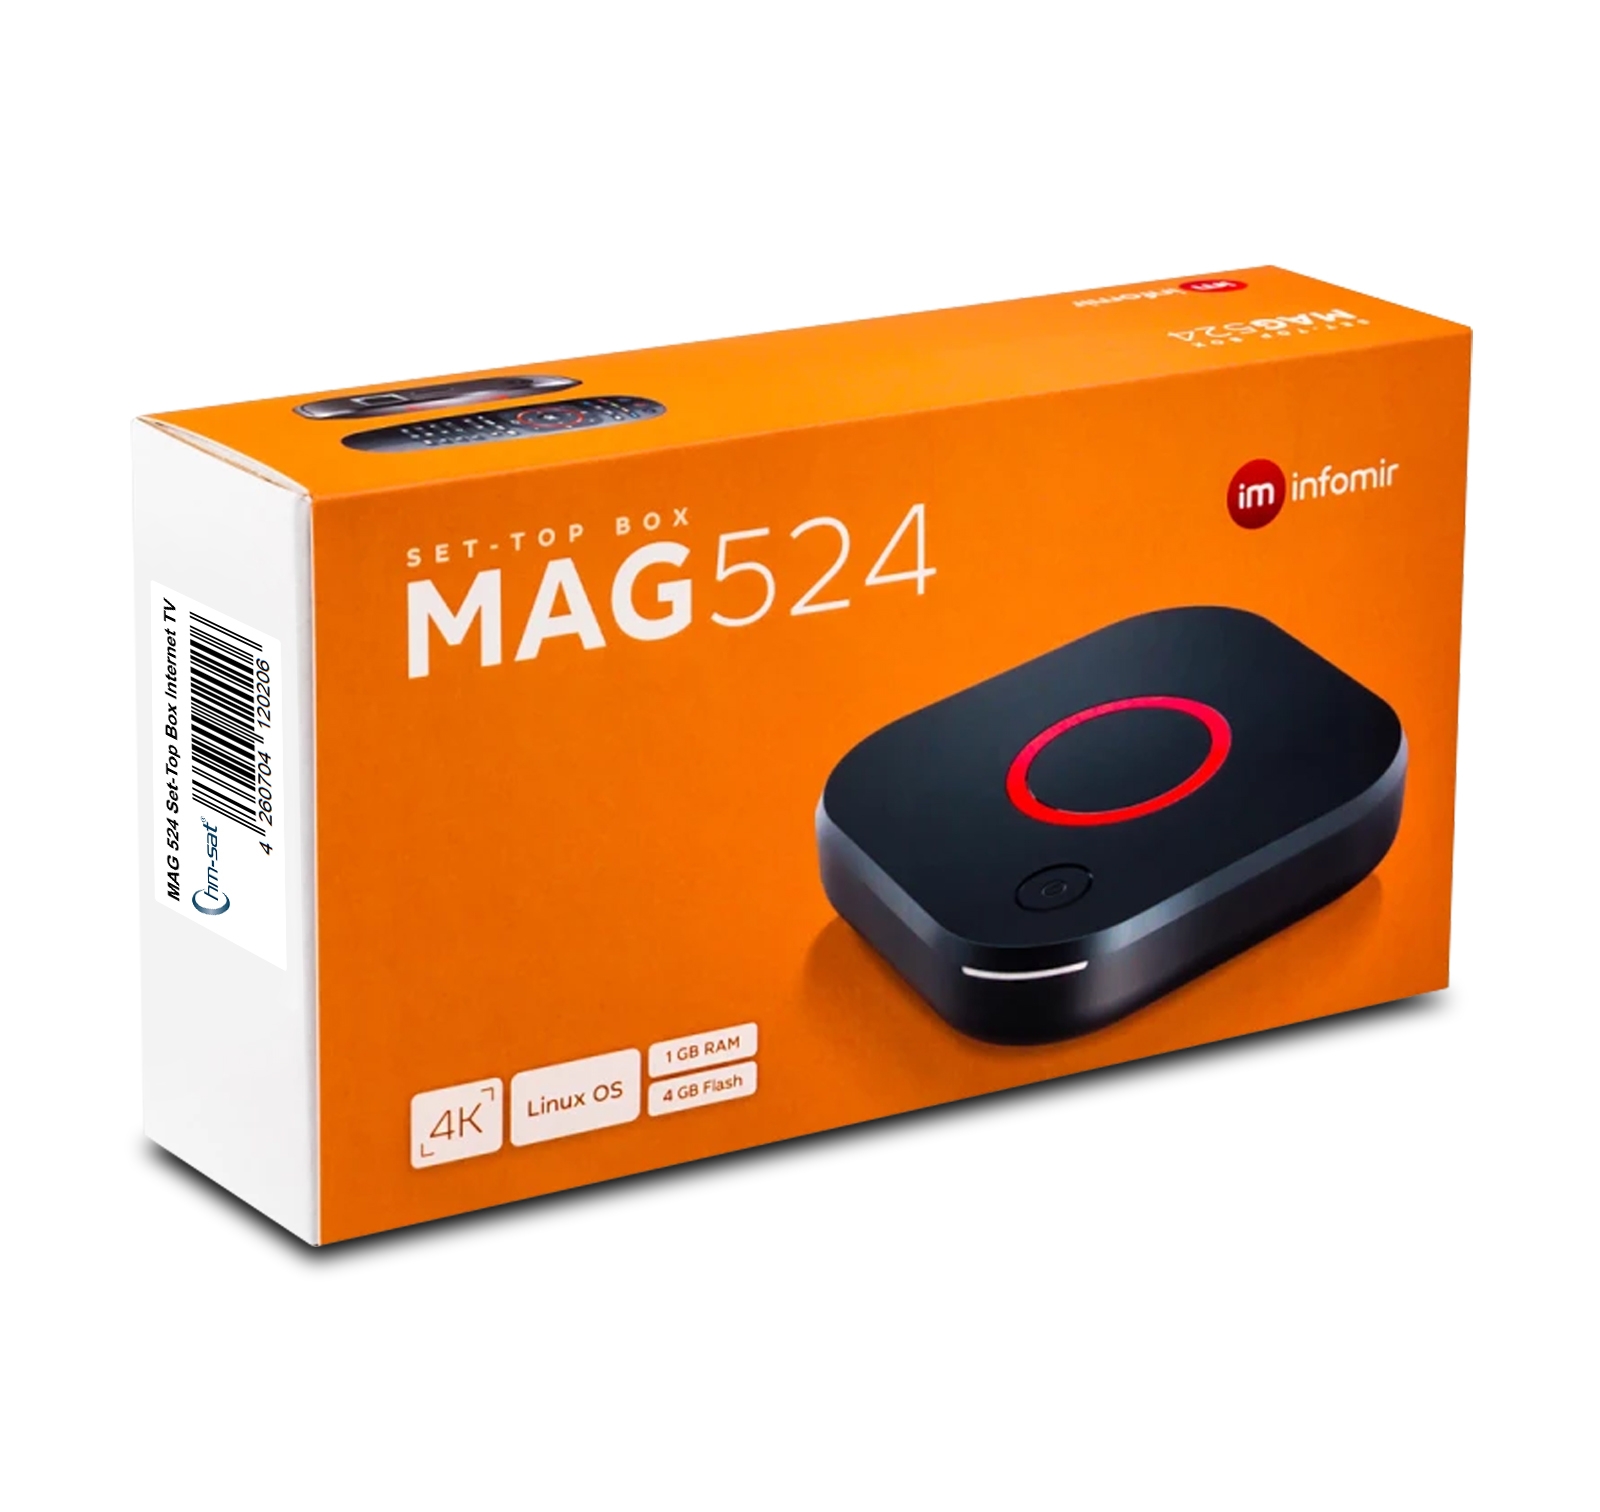 MAG 524 IP TV Internet Streamer HEVC H.265 4K UHD 60FPS Linux USB 3.0 LAN HDMI